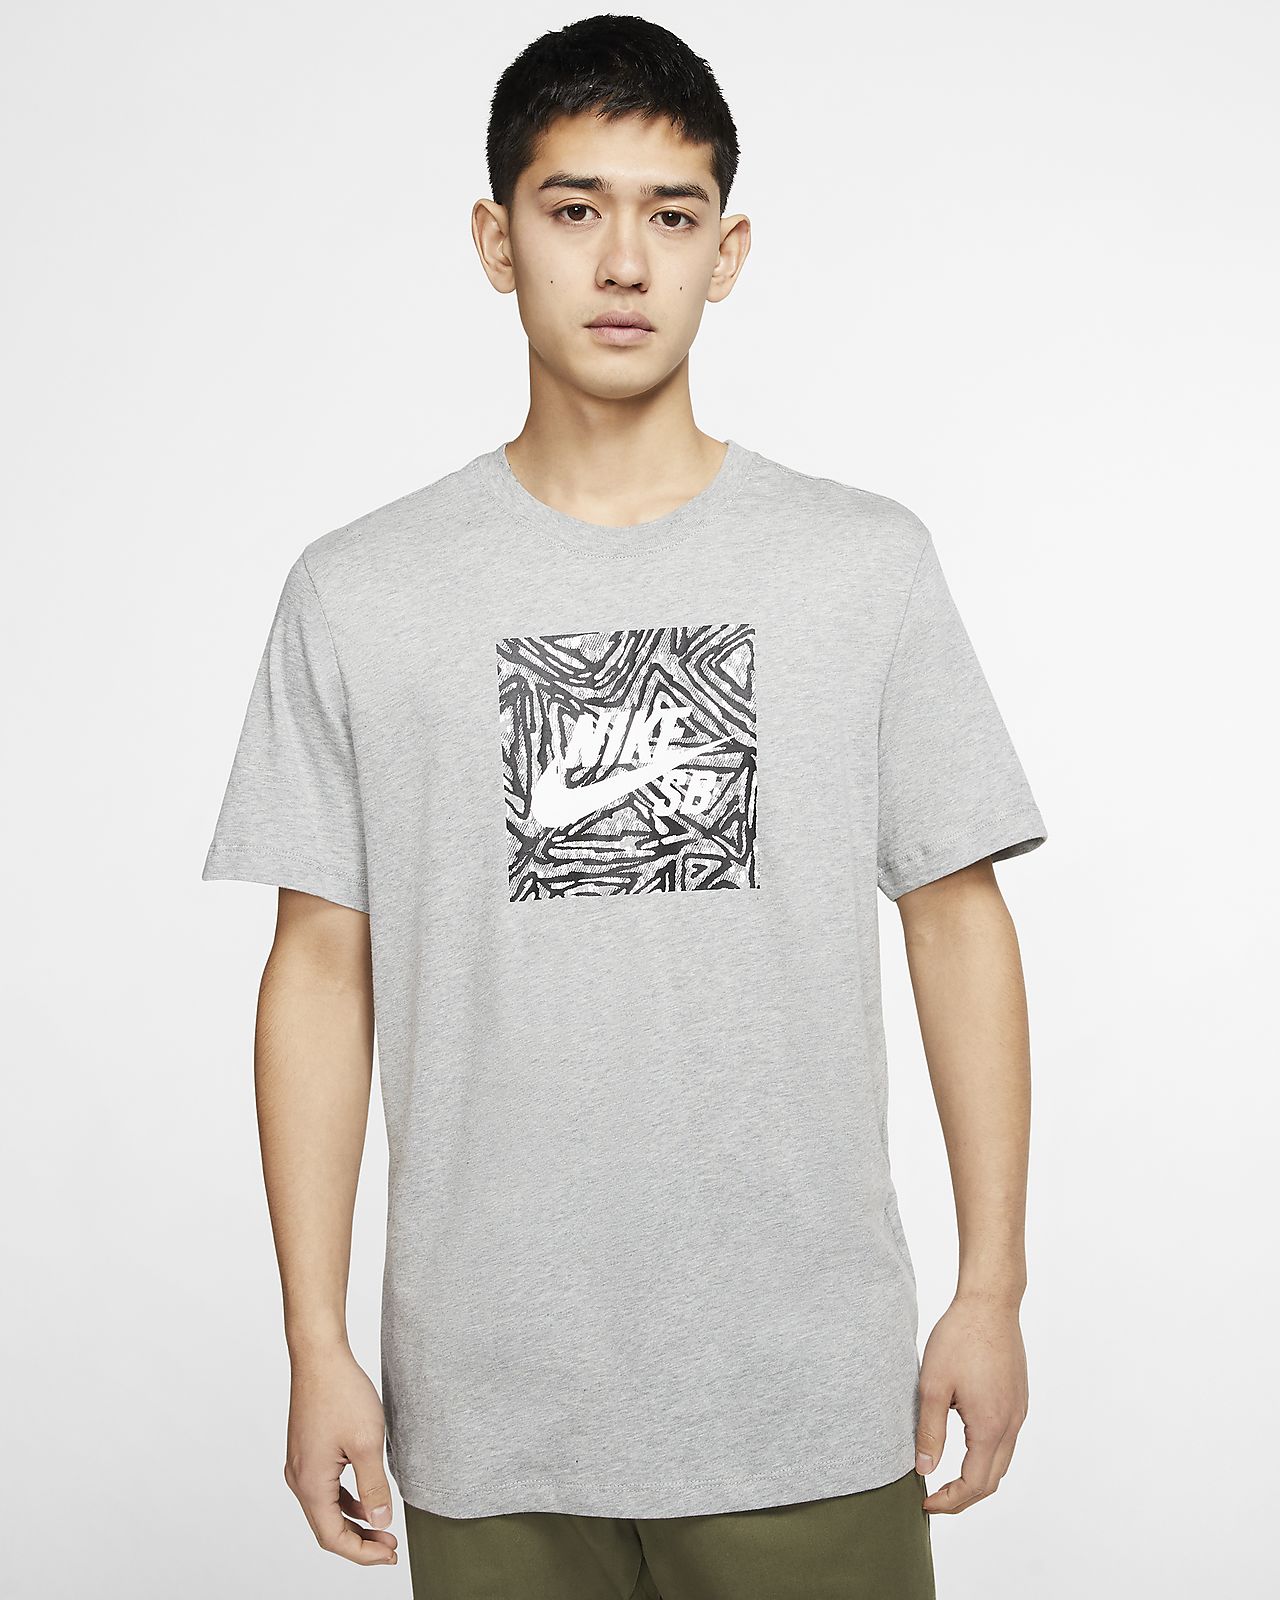 Nike公式 ナイキ Sb メンズ スケート Tシャツ オンラインストア 通販